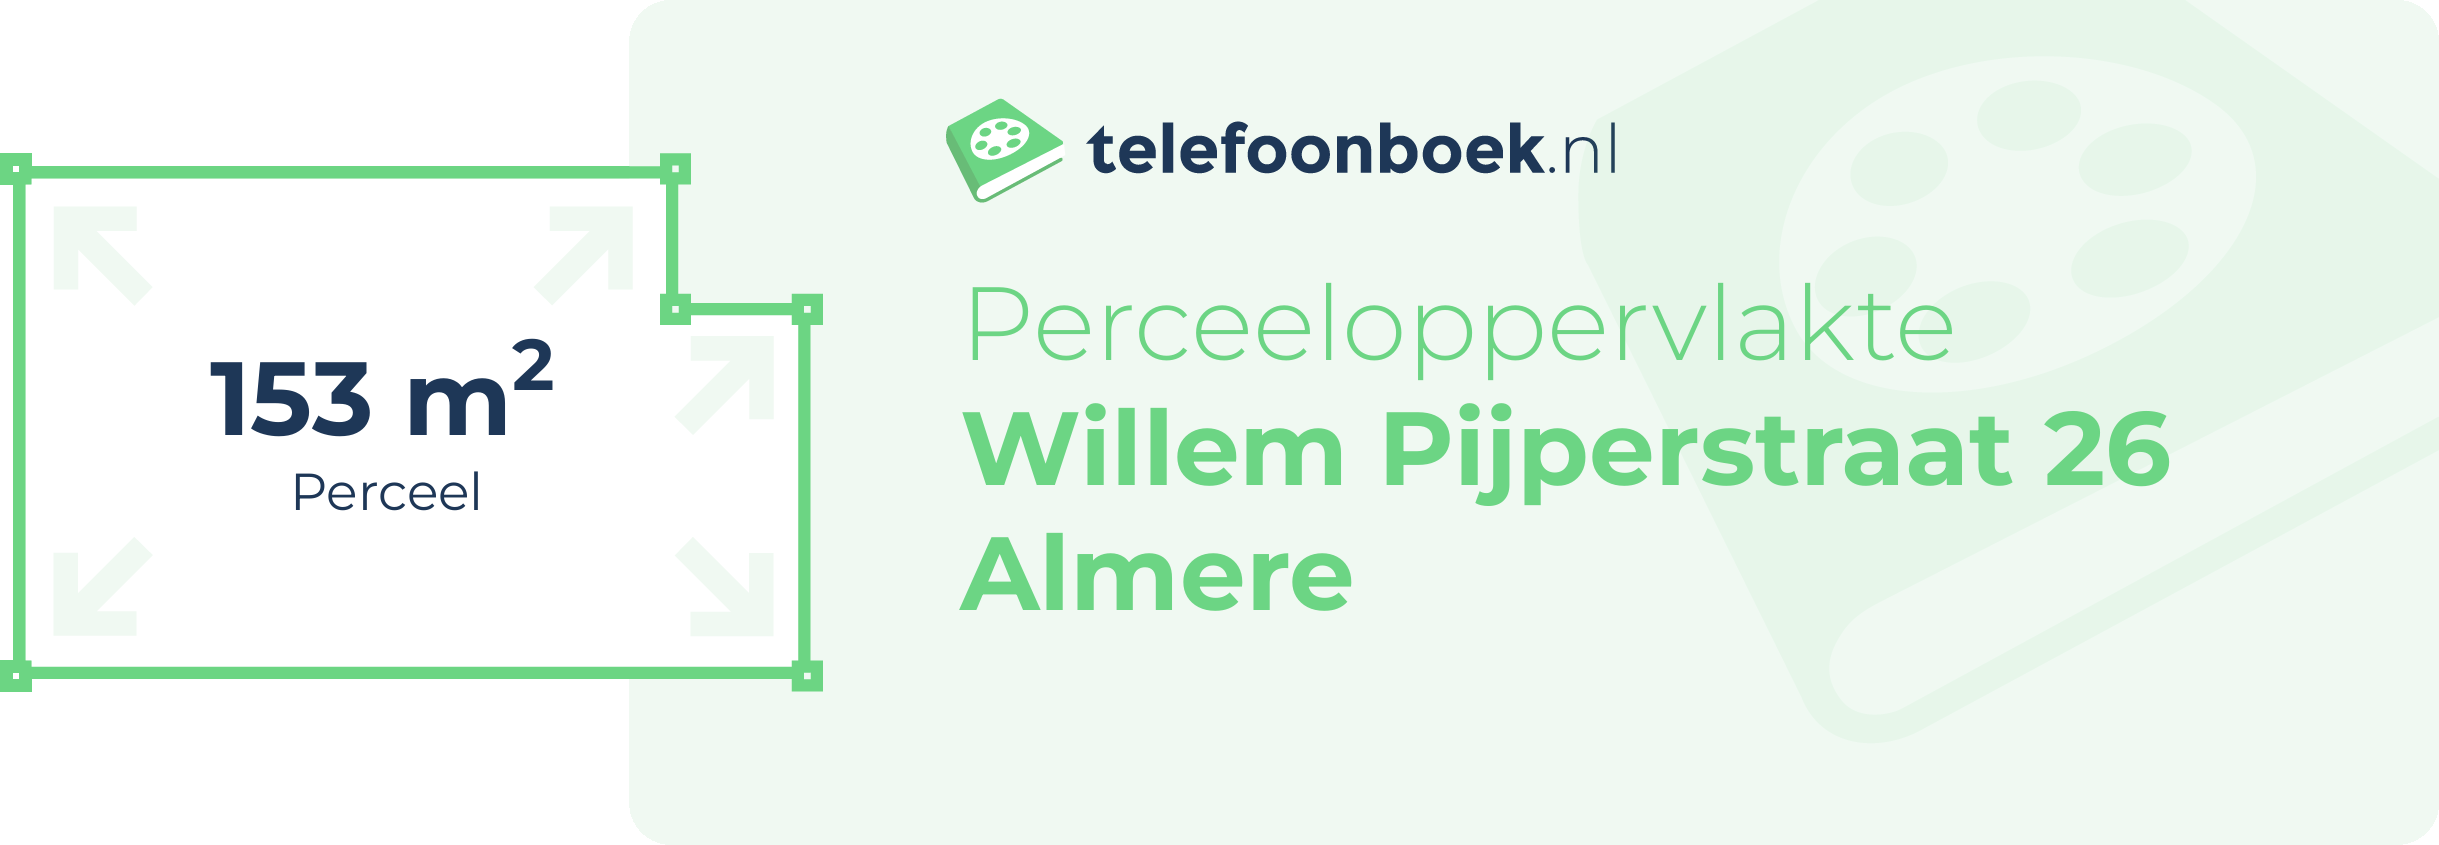 Perceeloppervlakte Willem Pijperstraat 26 Almere